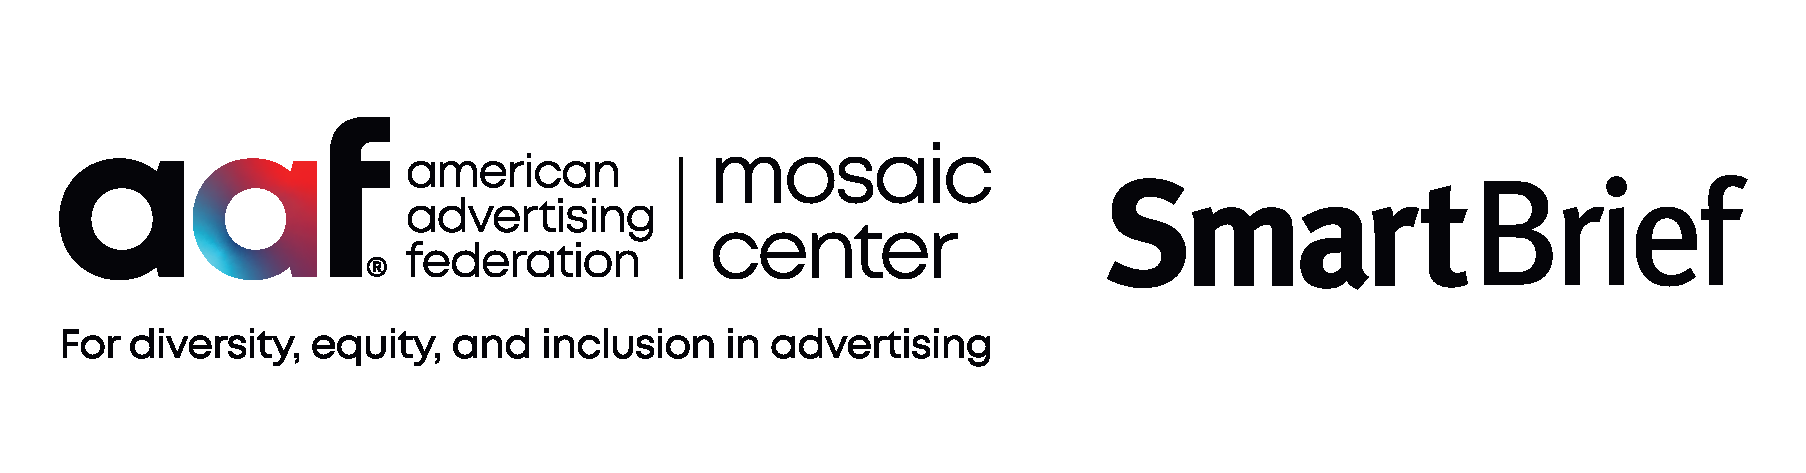 AAF Mosaic Center SmartBrief